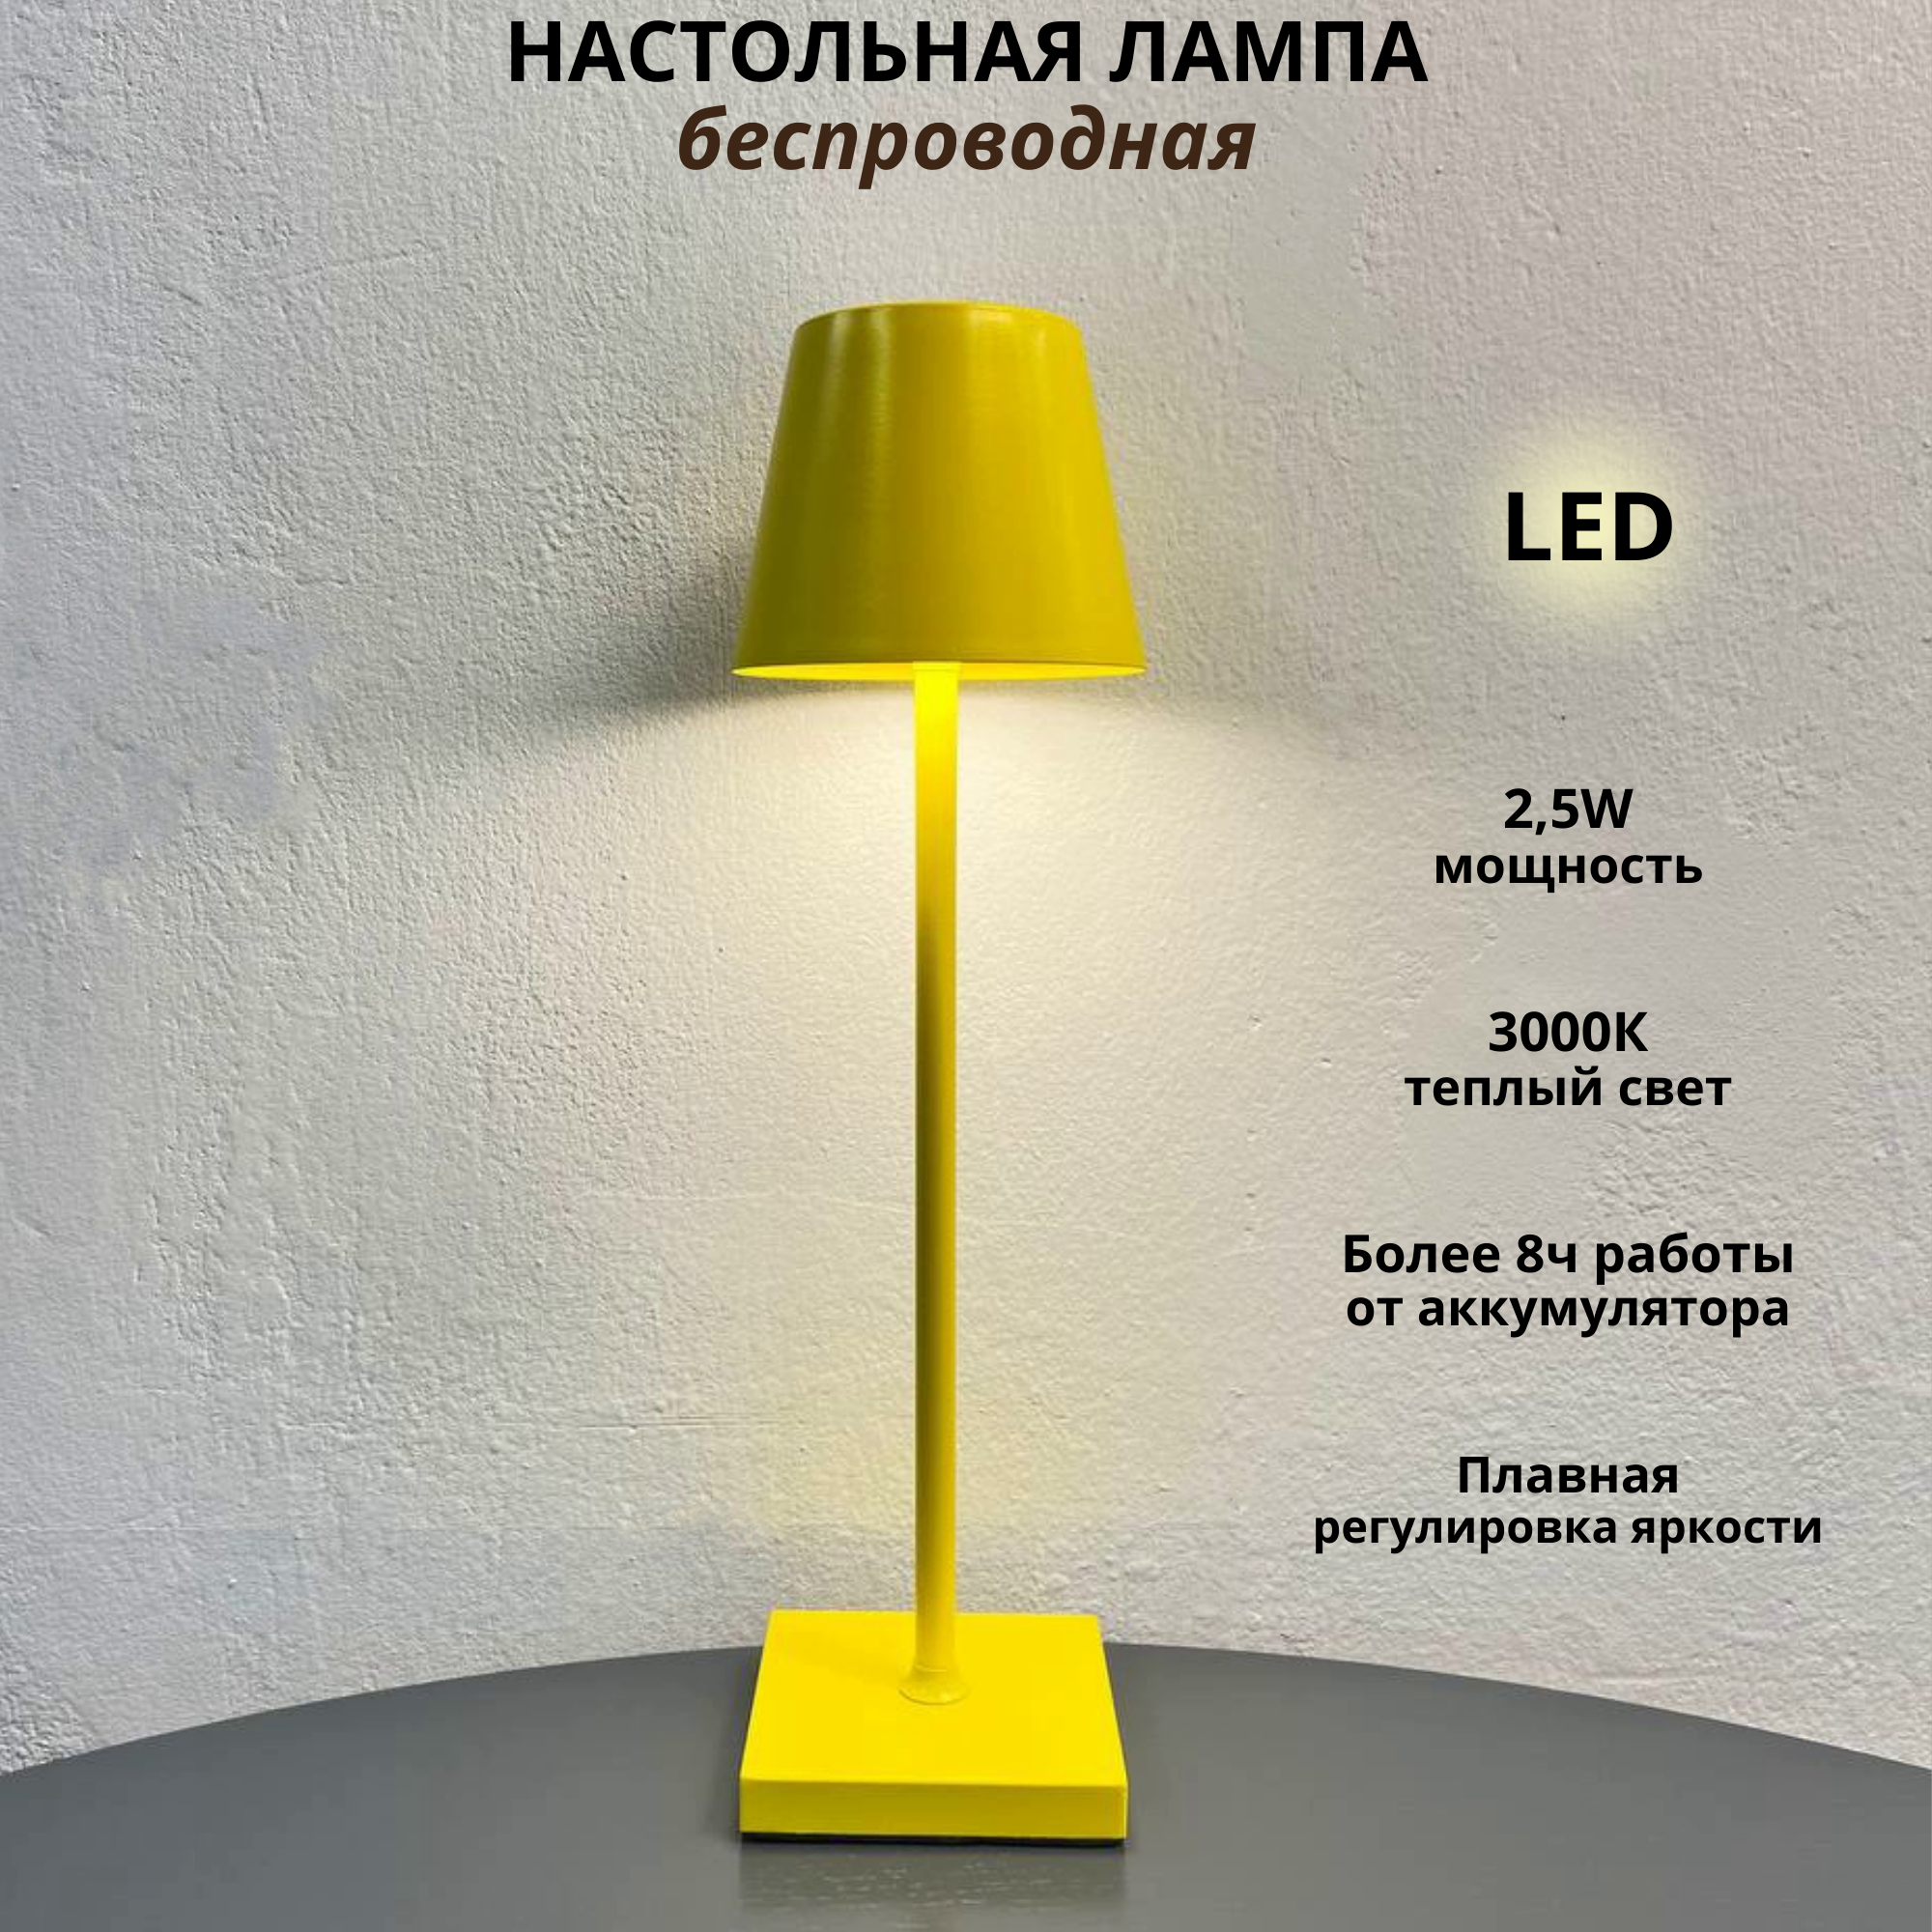 Беспроводная лампа настольная FEDOTOV светодиодная с аккумулятором LED 3000Кжелтая